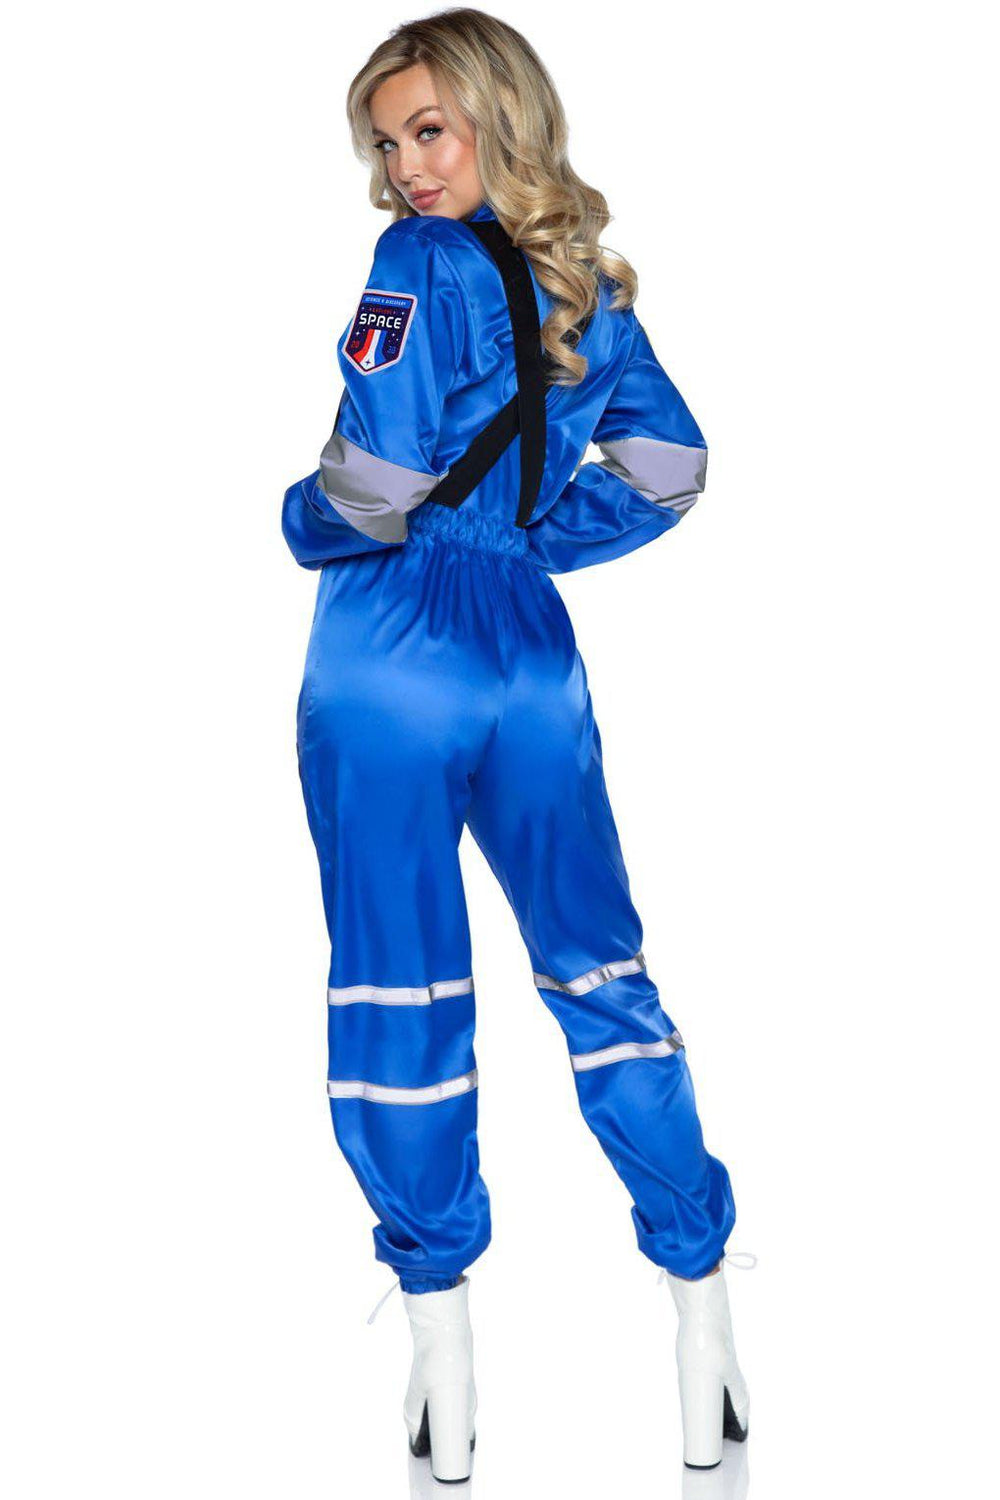 Space Explorer Costume-Space Costumes-Leg Avenue-SEXYSHOES.COM